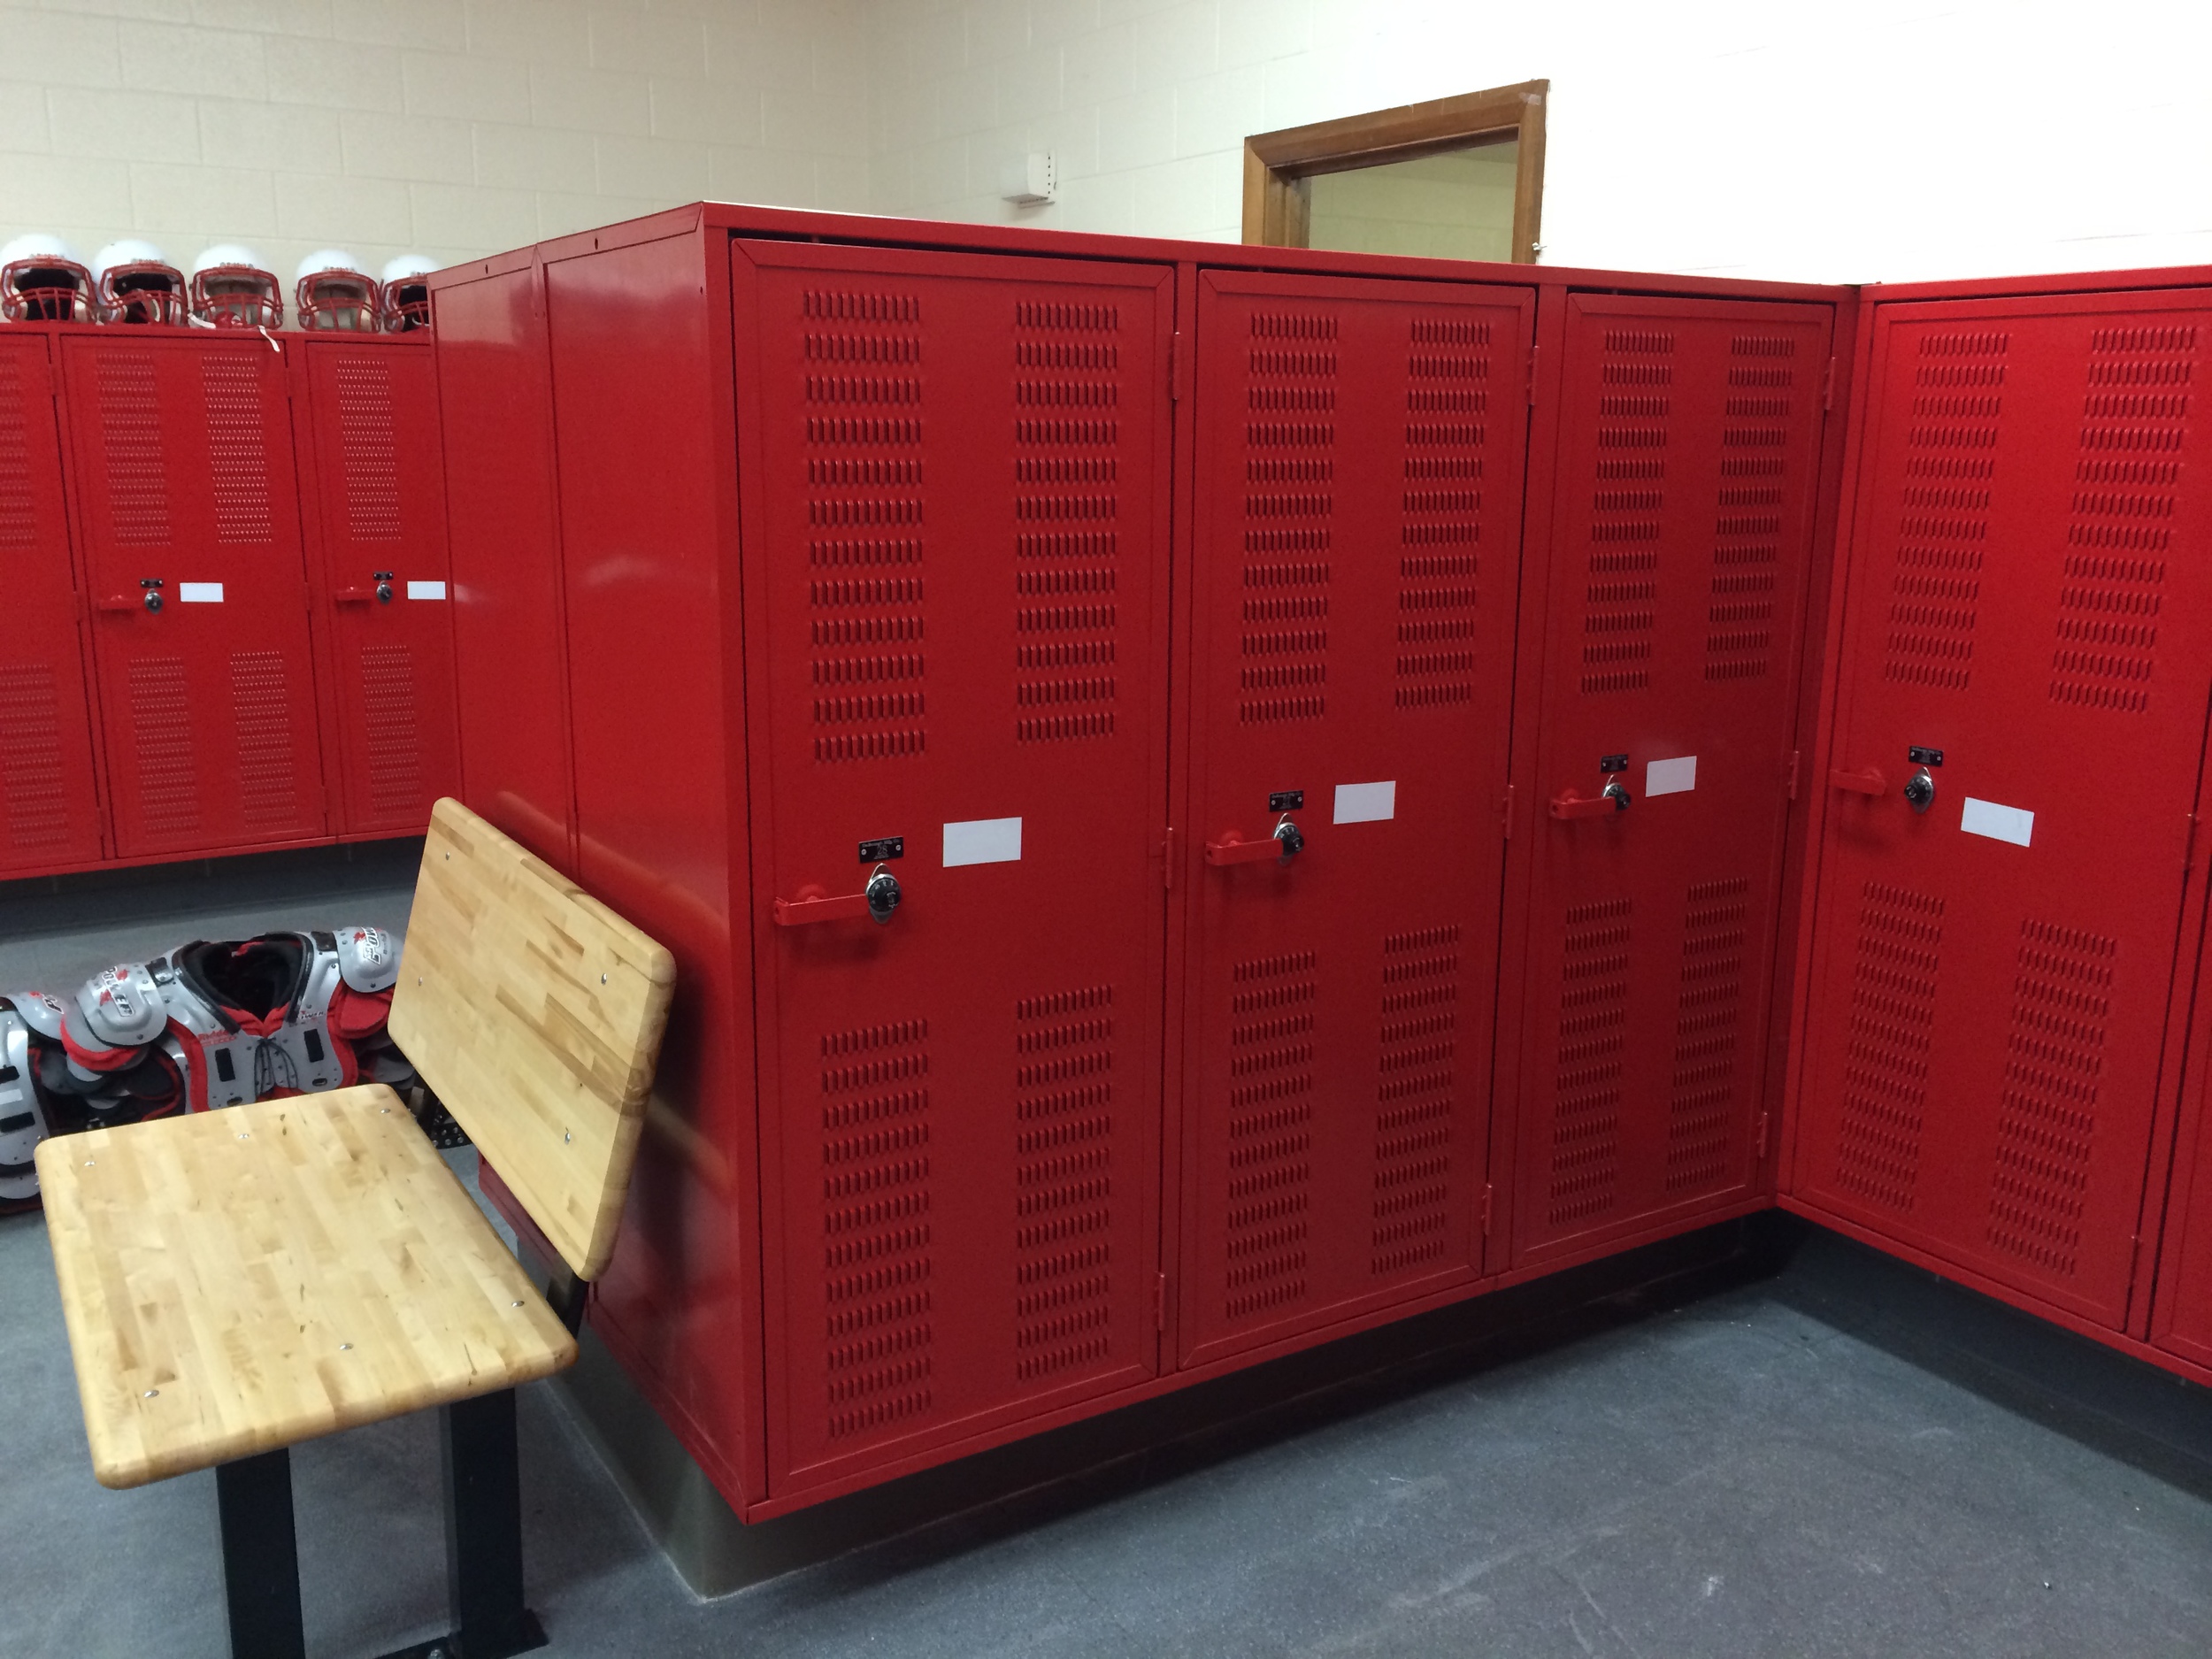 Wisconsin high school spends $662,002 on upgrades to locker rooms